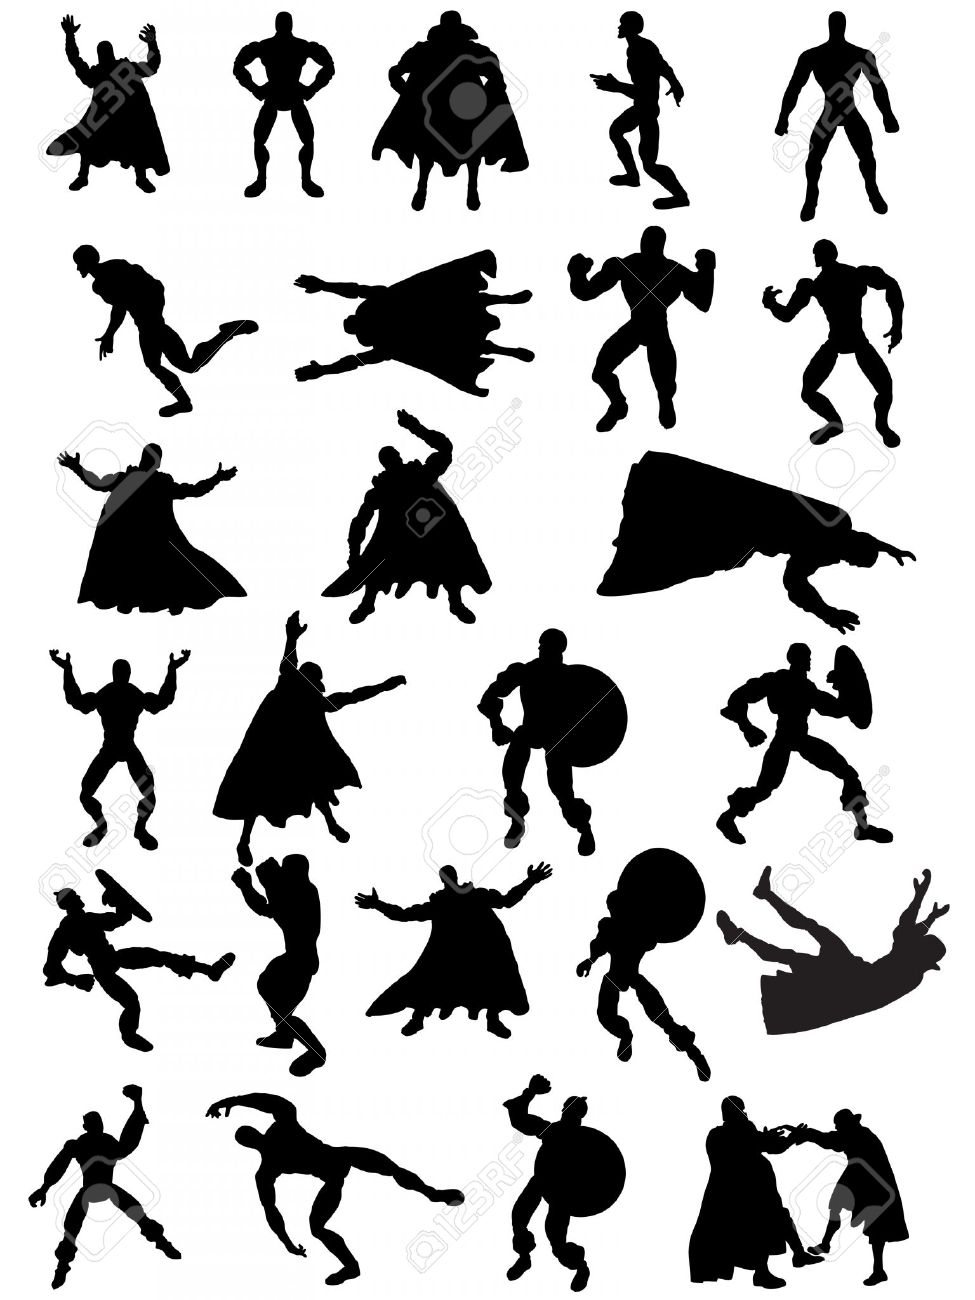 Free Superhero Silhouette Clip Art, Download Free Clip Art